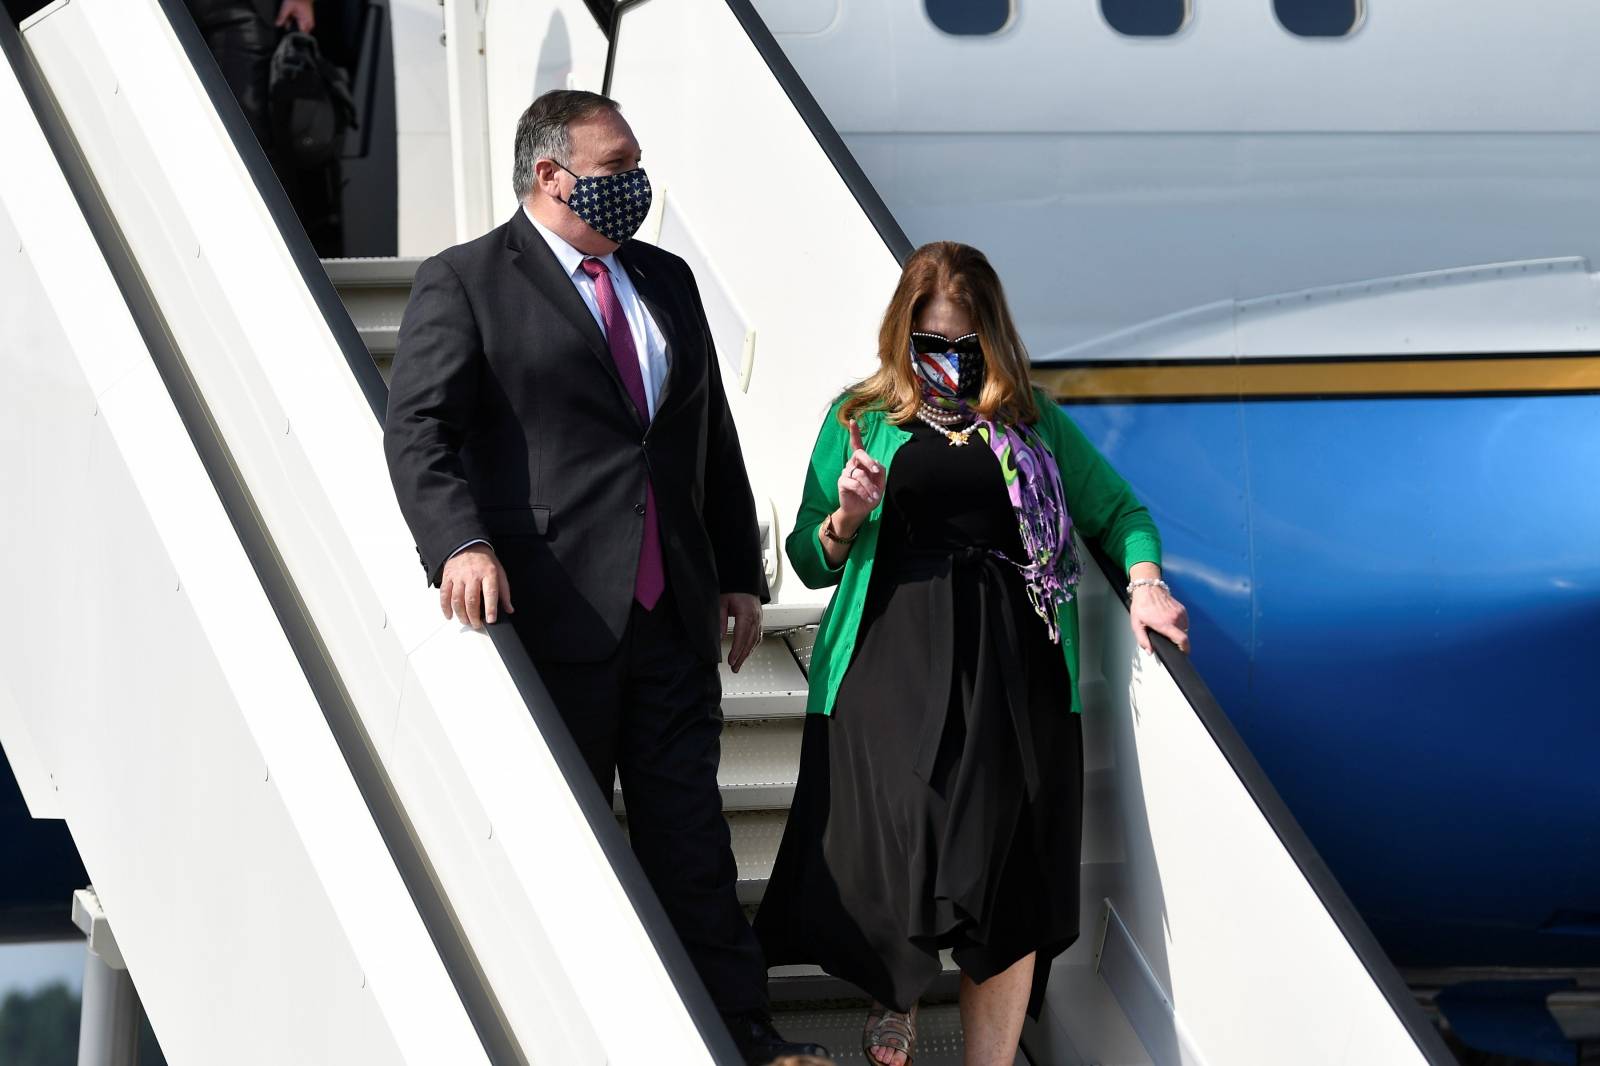 U.S. Secretary of State Pompeo arrives in Slovenia